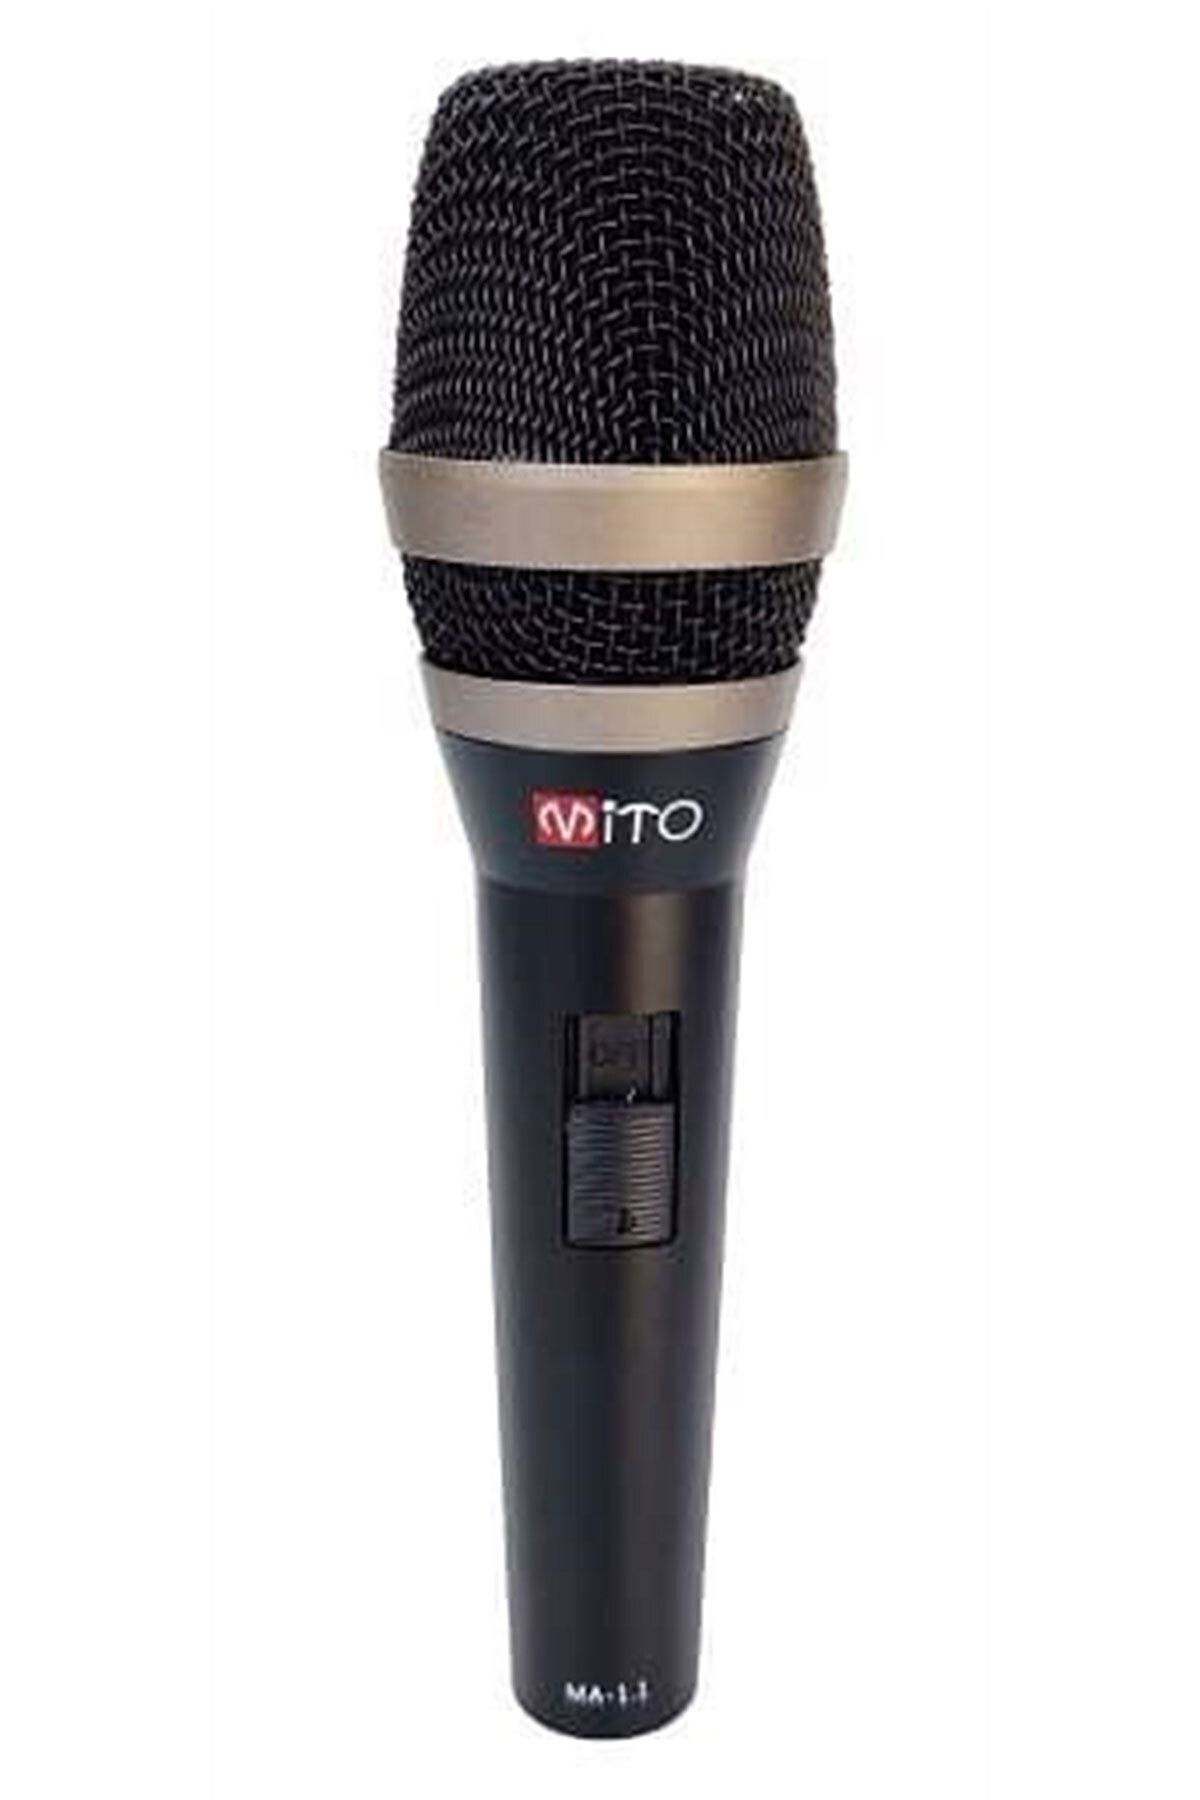 Mito Mıto Ma 1.1 Kablolu Mikrofon